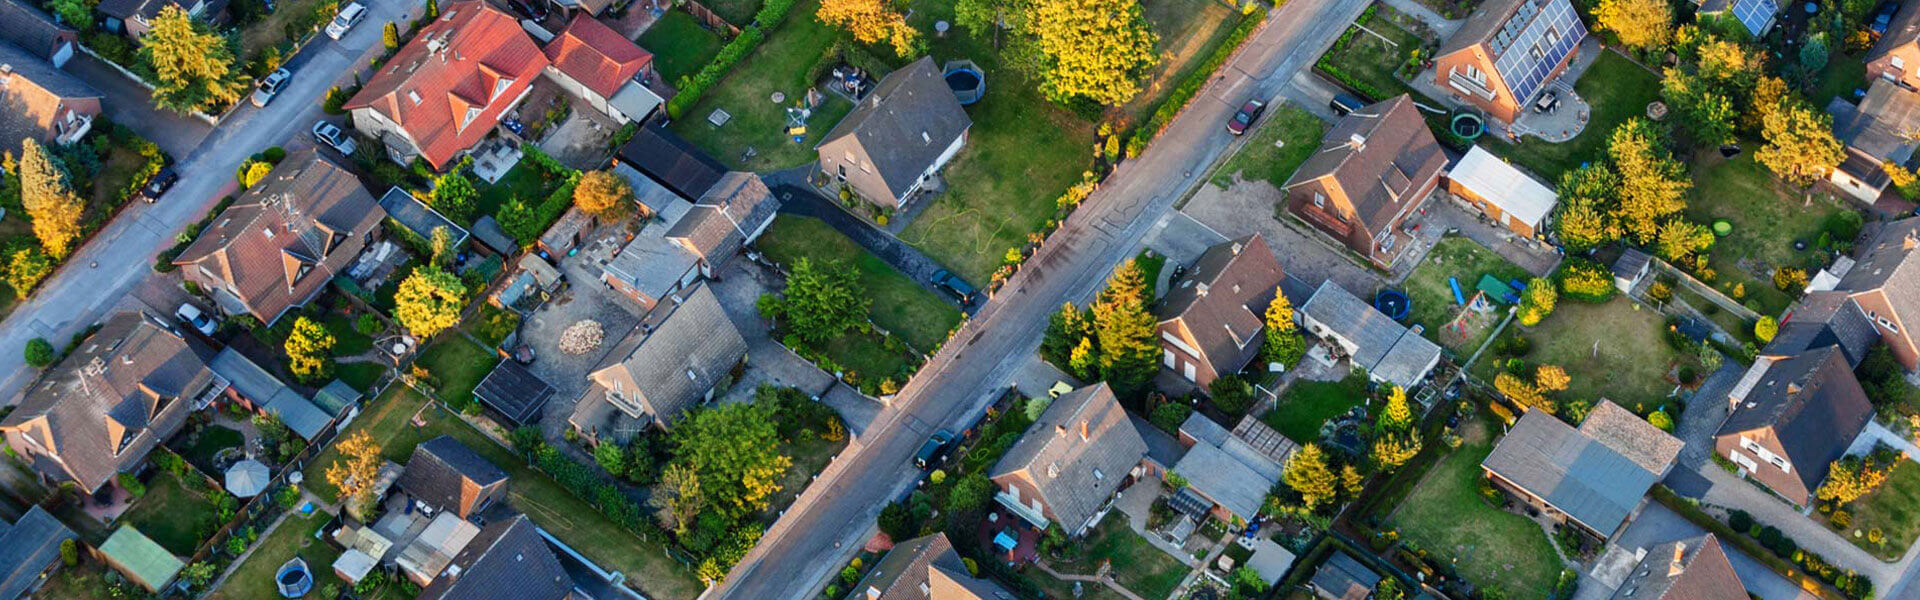 Residential Street Aerial View